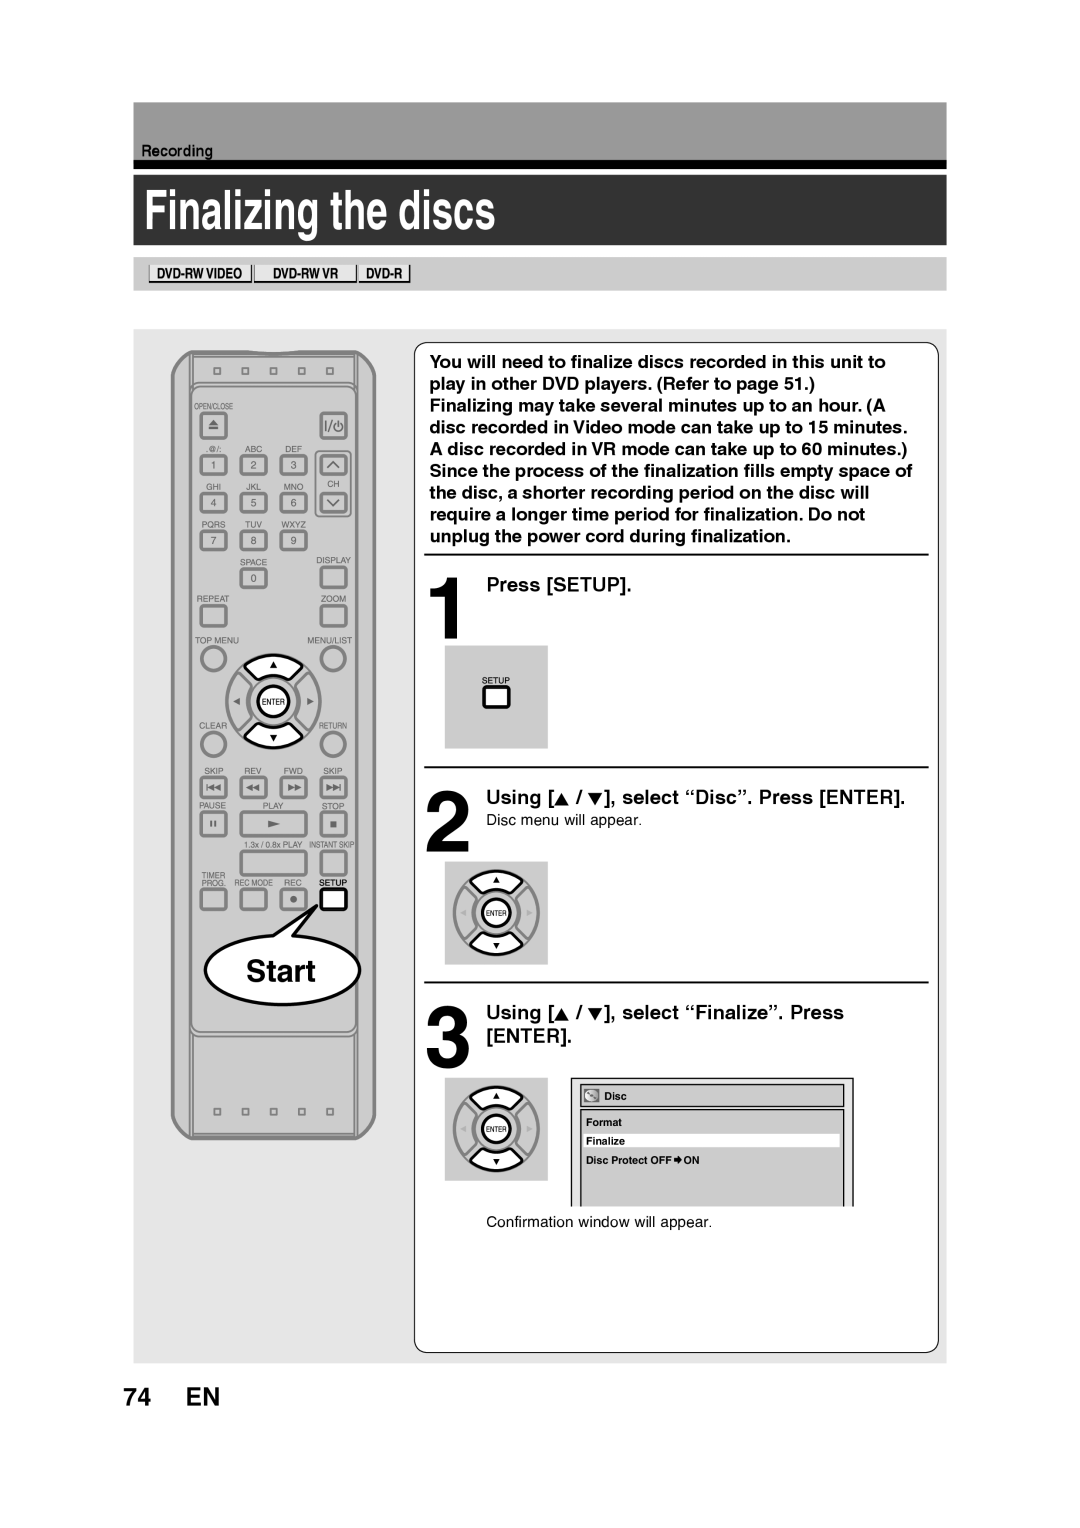 Toshiba D-RW2SU/D-RW2SC manual Finalizing the discs, 74 EN, Using K / L, select “Finalize”. Press ENTER, Start 